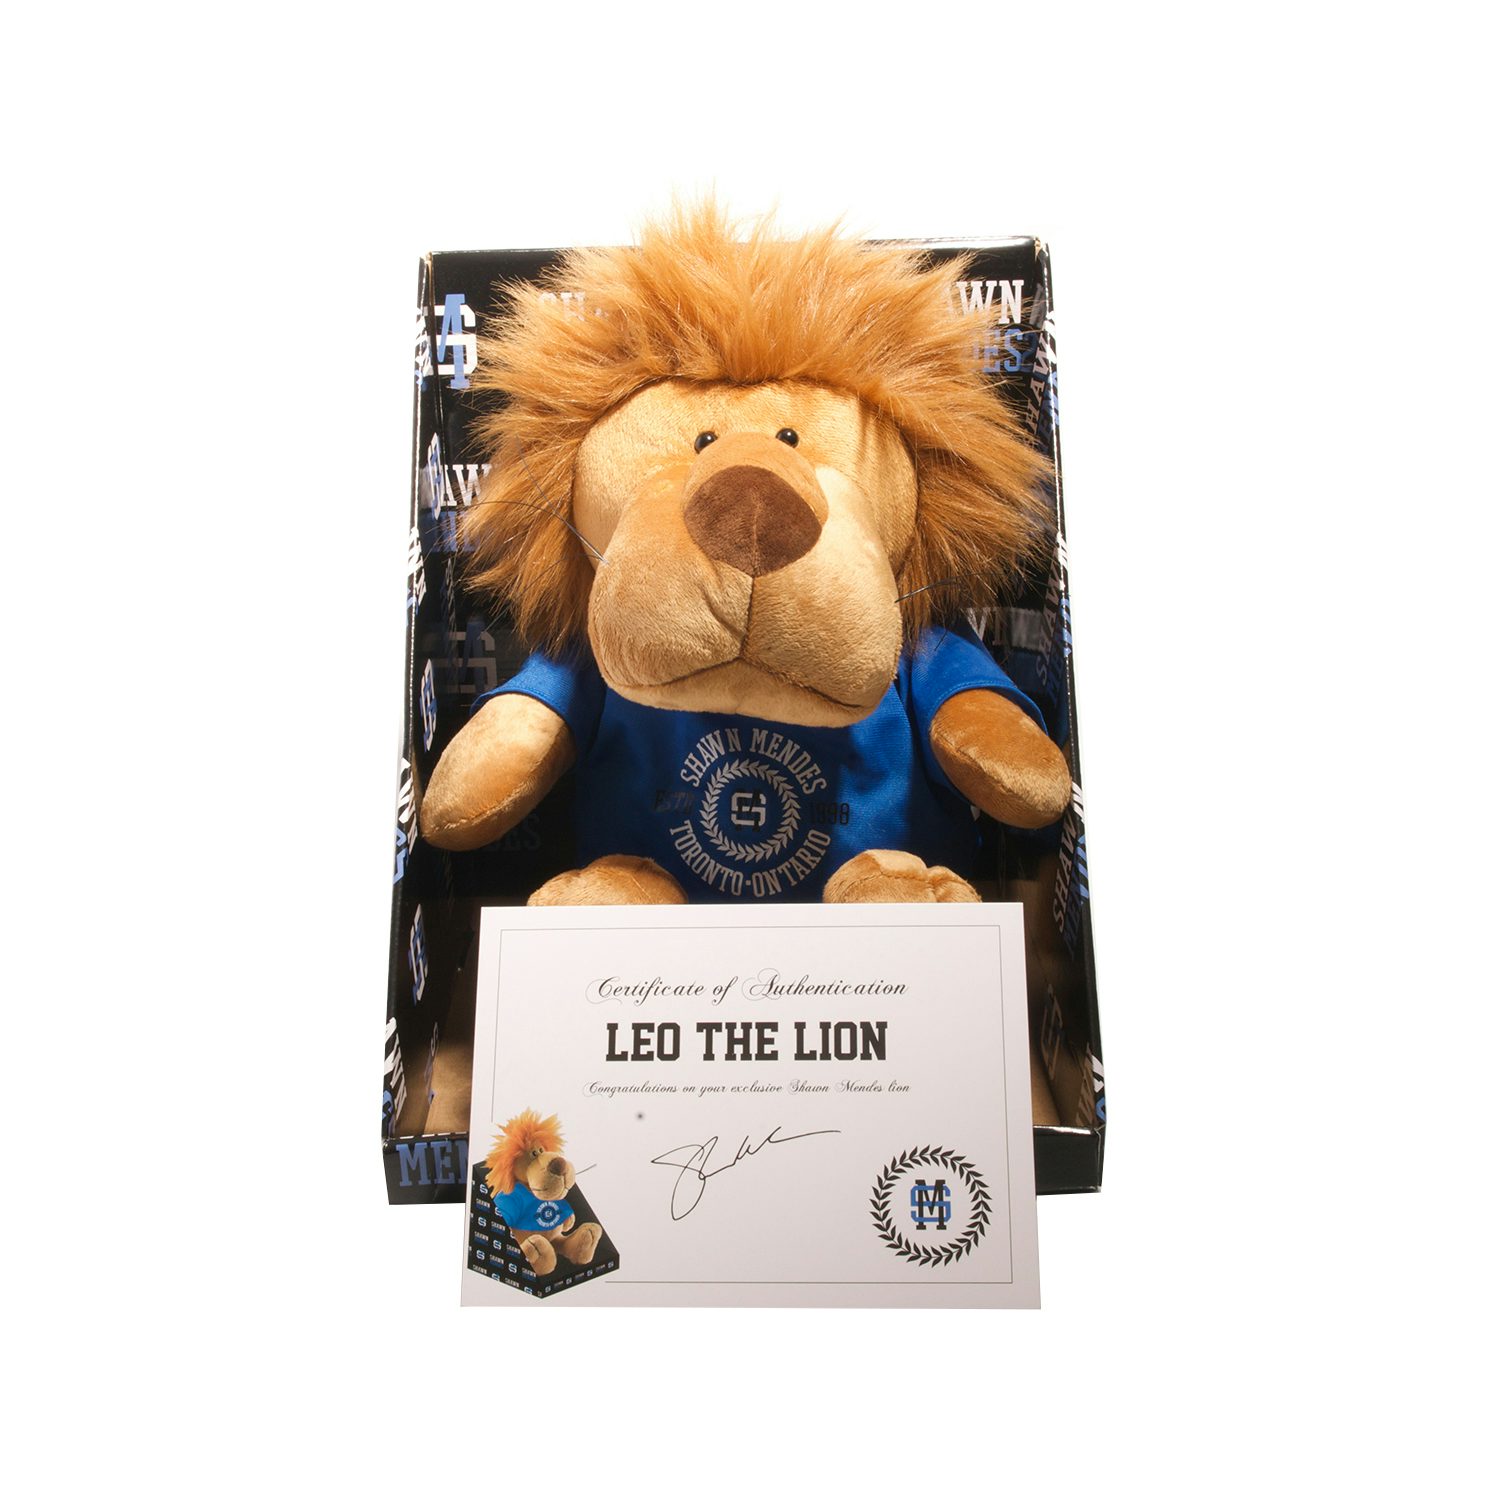 leo the lion stuffed animal